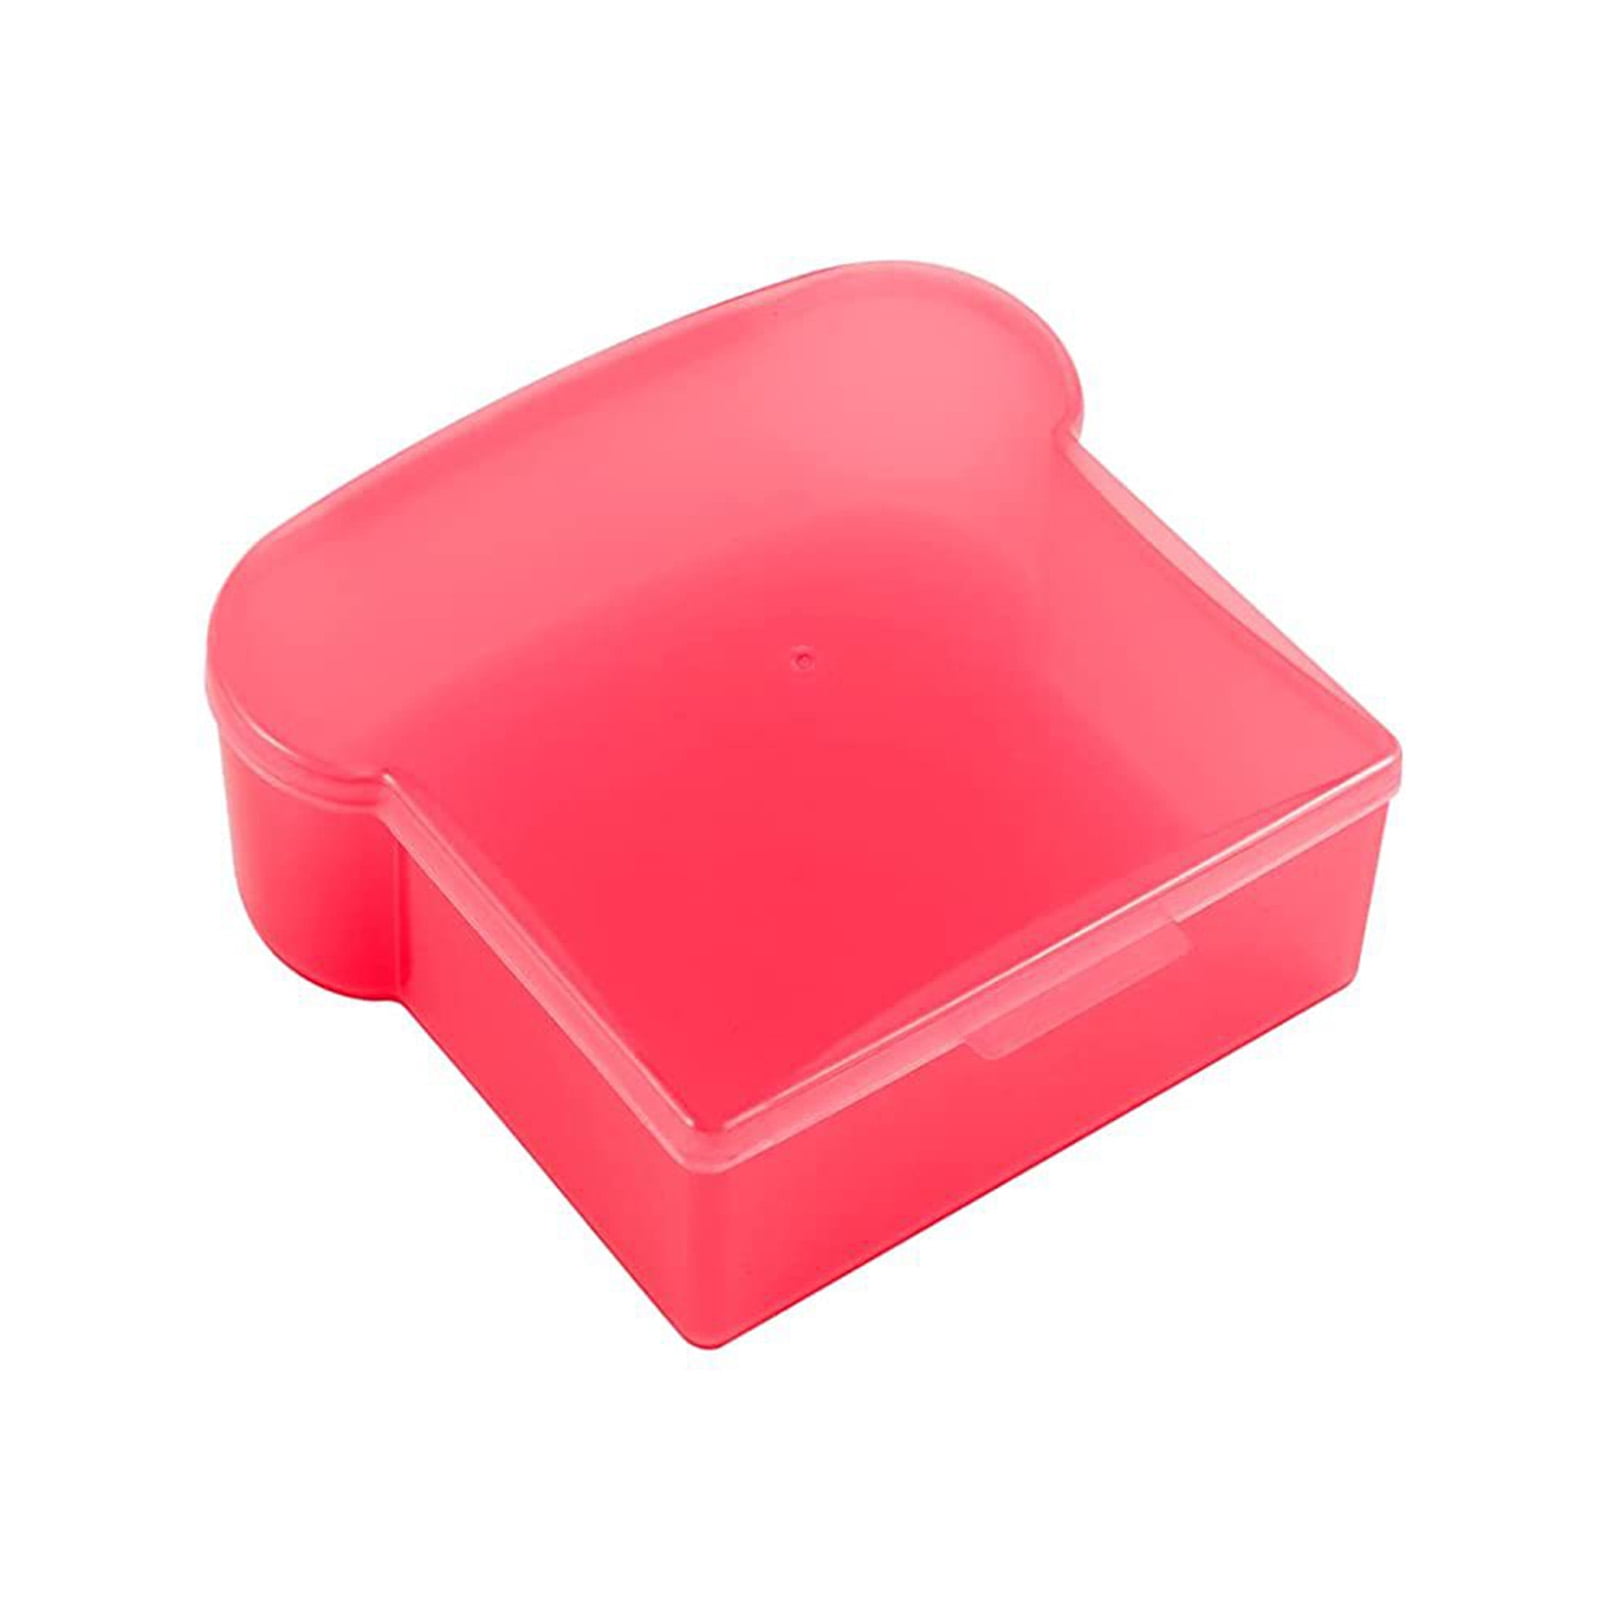 Tafura Sandwich Containers (2 Pack) Sandwich Box | Lunch Containers |  Sandwich Containers for Lunch Boxes | Reusable Sandwich Holder, BPA Free  (Black)